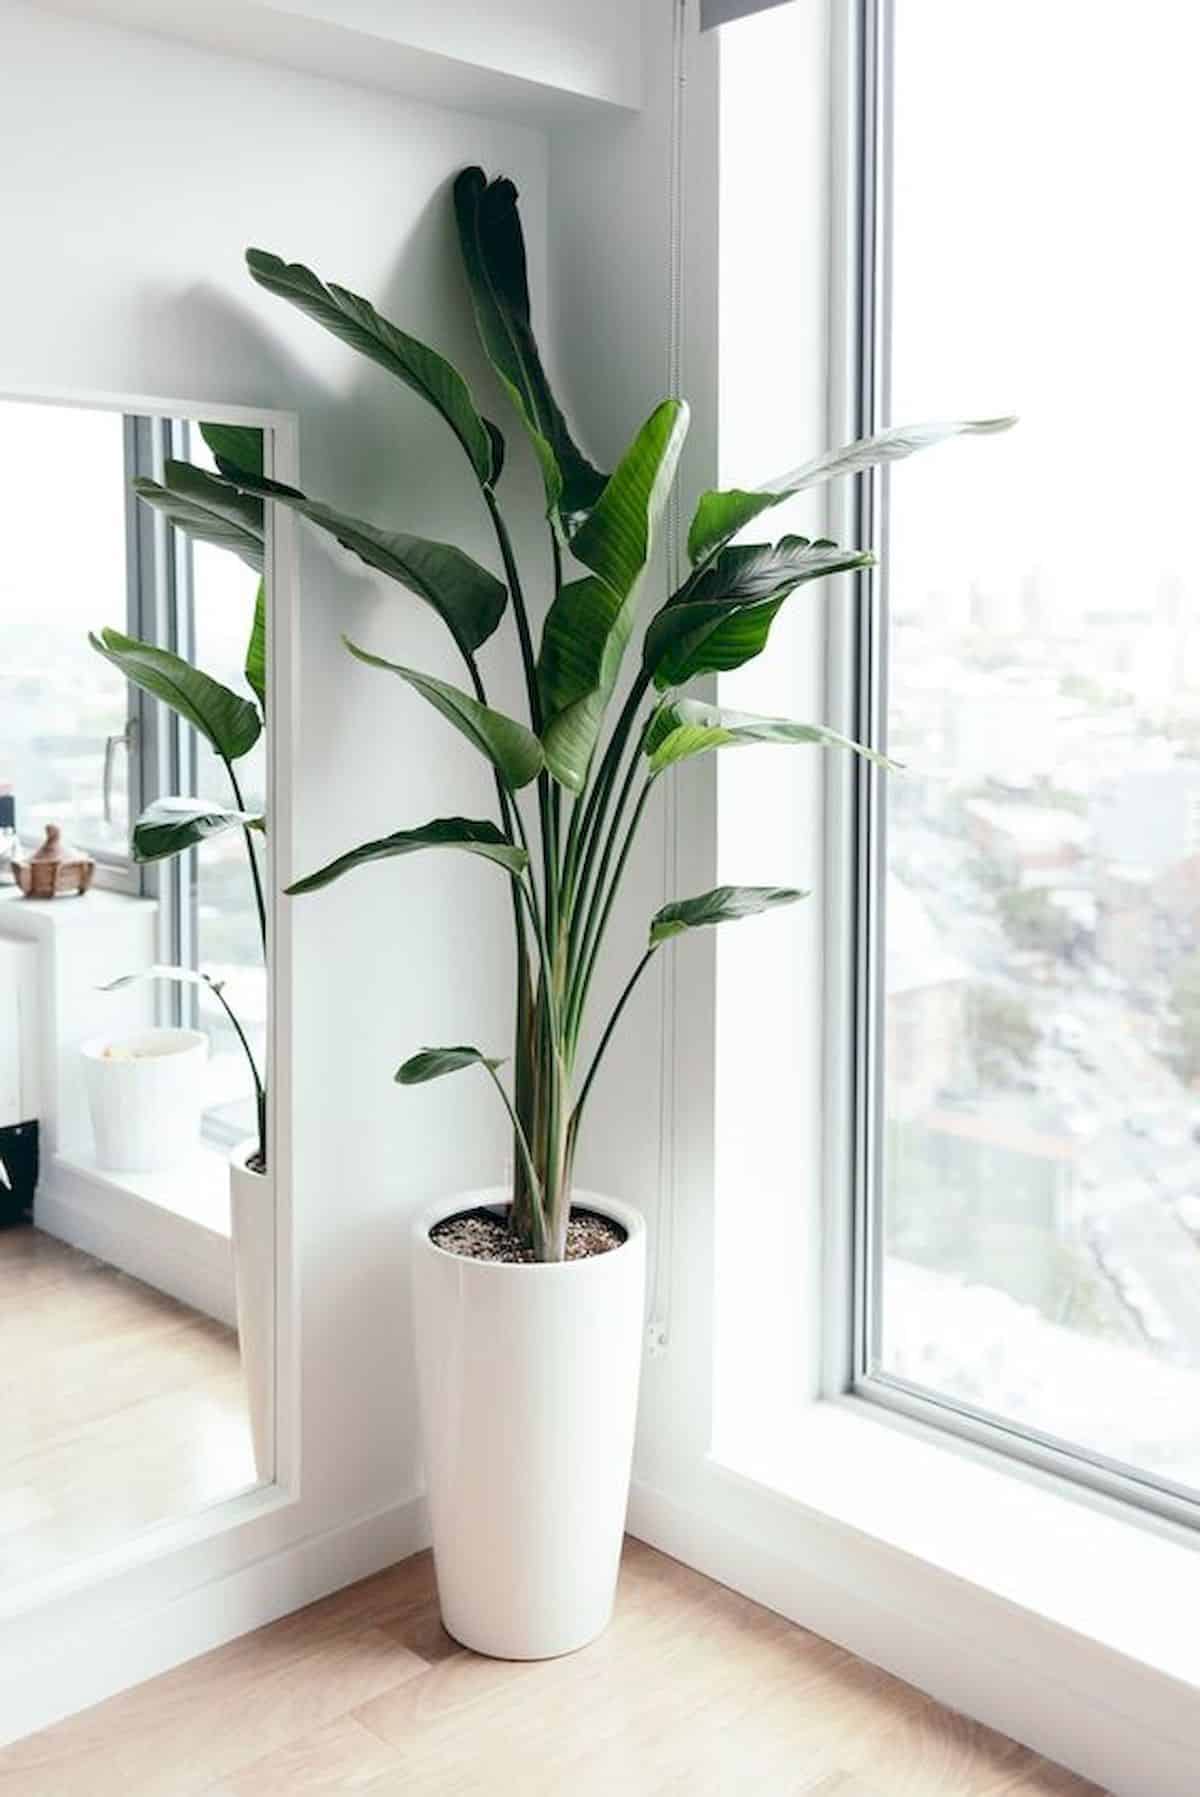 Descubre la planta que está de moda en decoración: Strelitzia 6